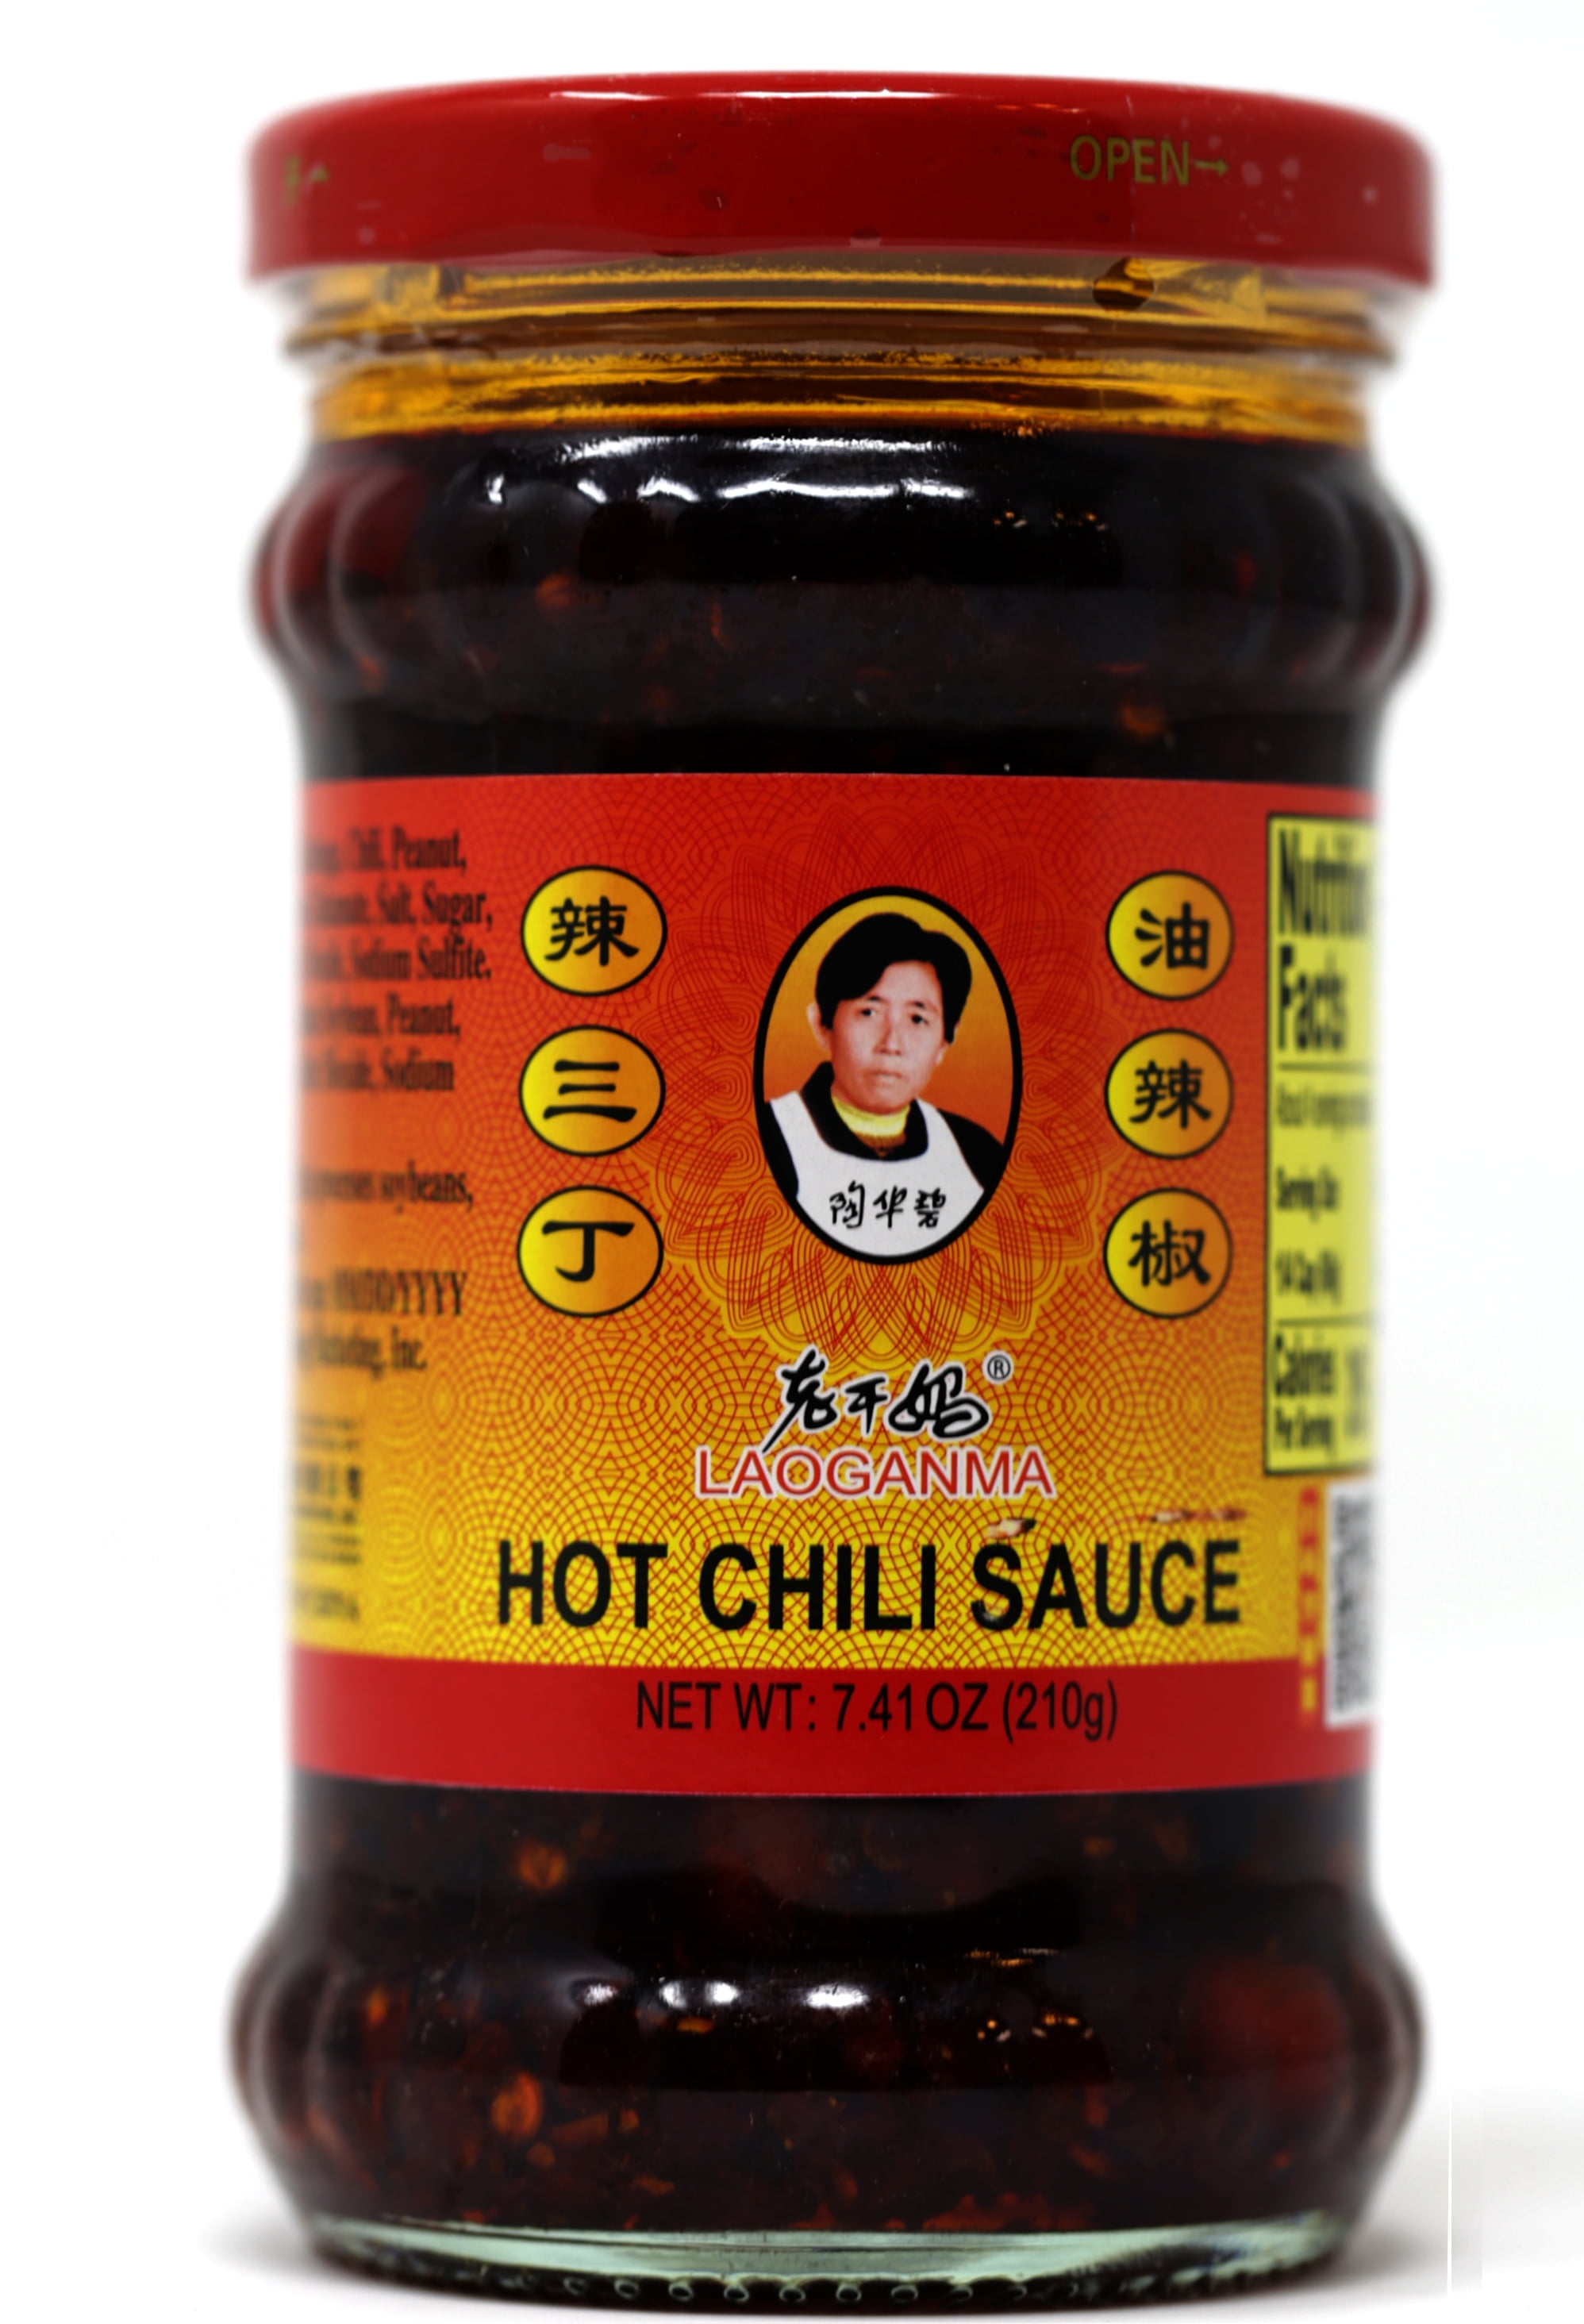 Lao Gan Ma Hot Chili Sauce Oil 7.41oz 1 Count = 1 Bottles - Walmart.com ...